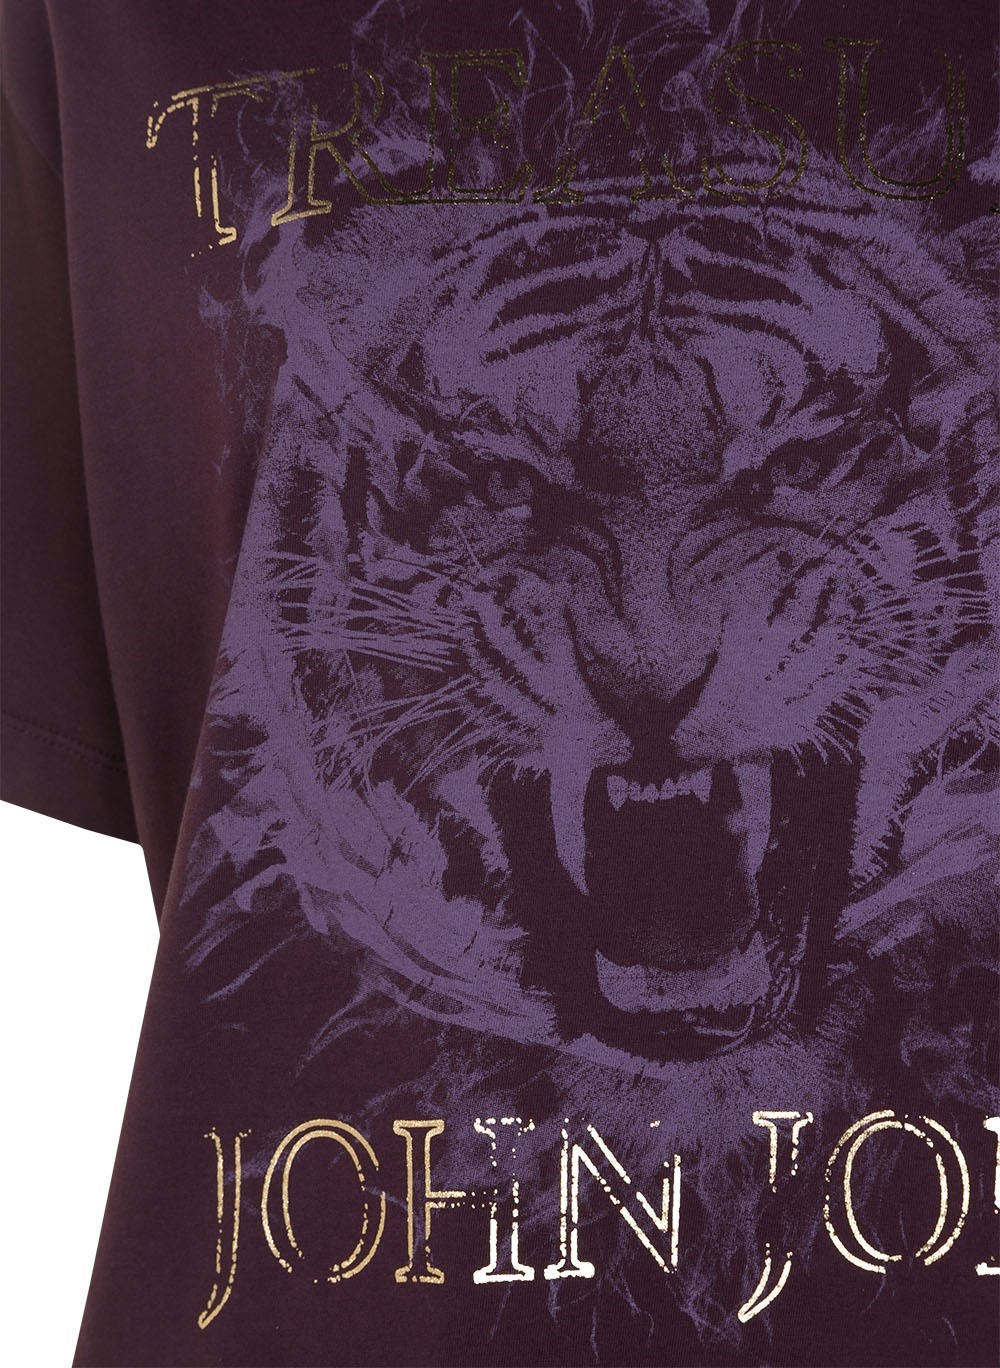 Camiseta Real Tigers John John Feminina 03.62.0258 - Camiseta Real